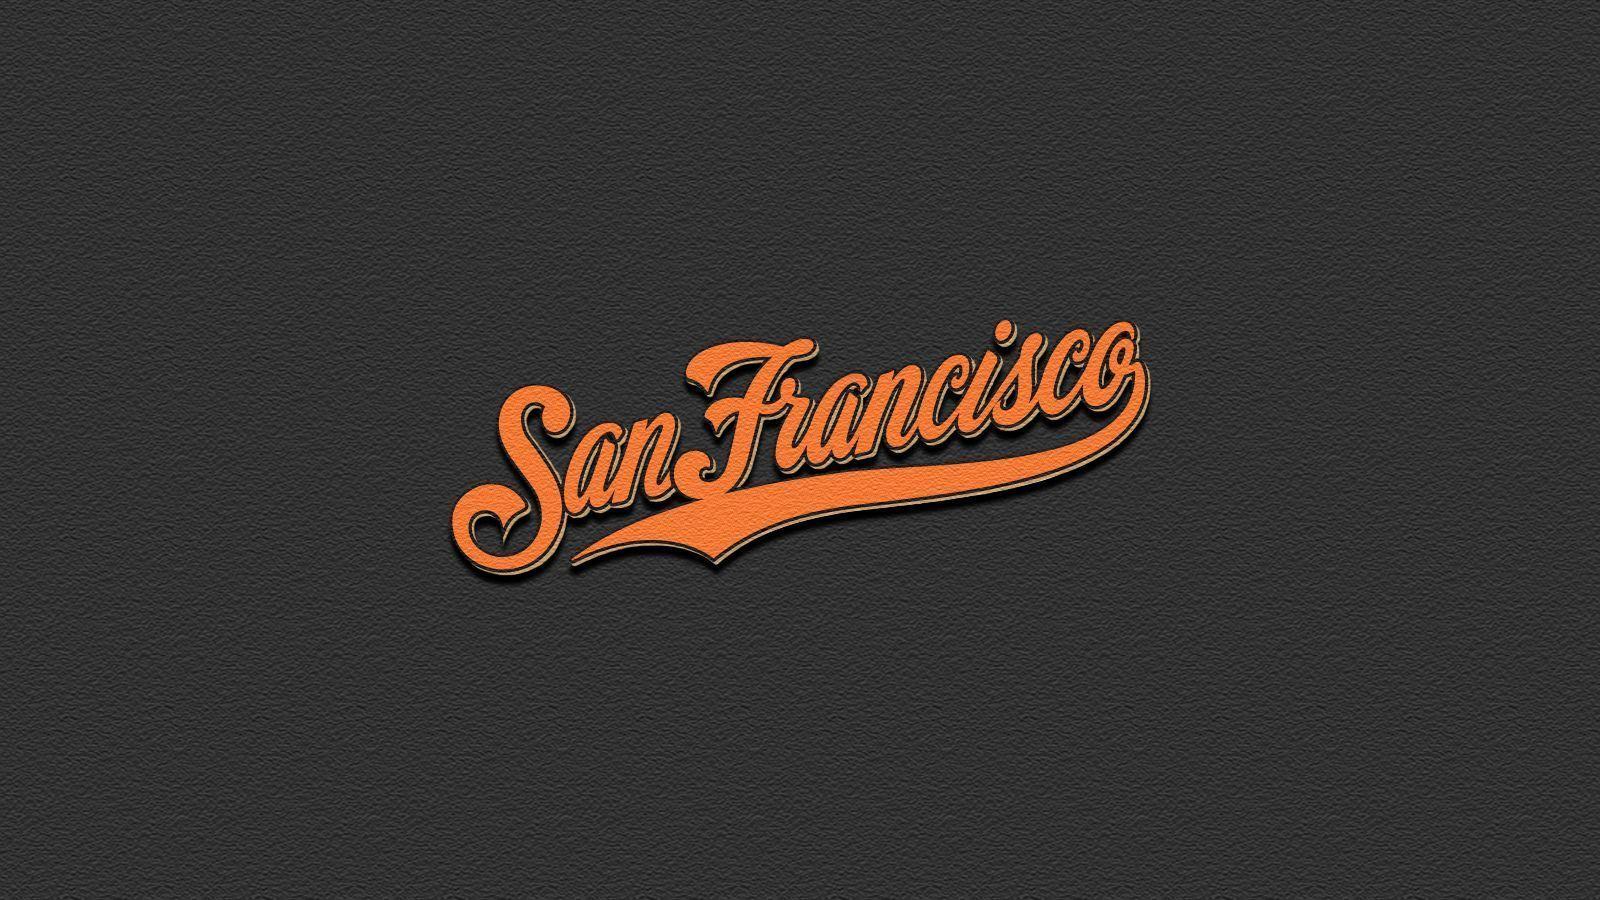 San Francisco Giants Mobile Wallpapers  Album on Imgur  San francisco  giants San francisco giants logo Sf giants